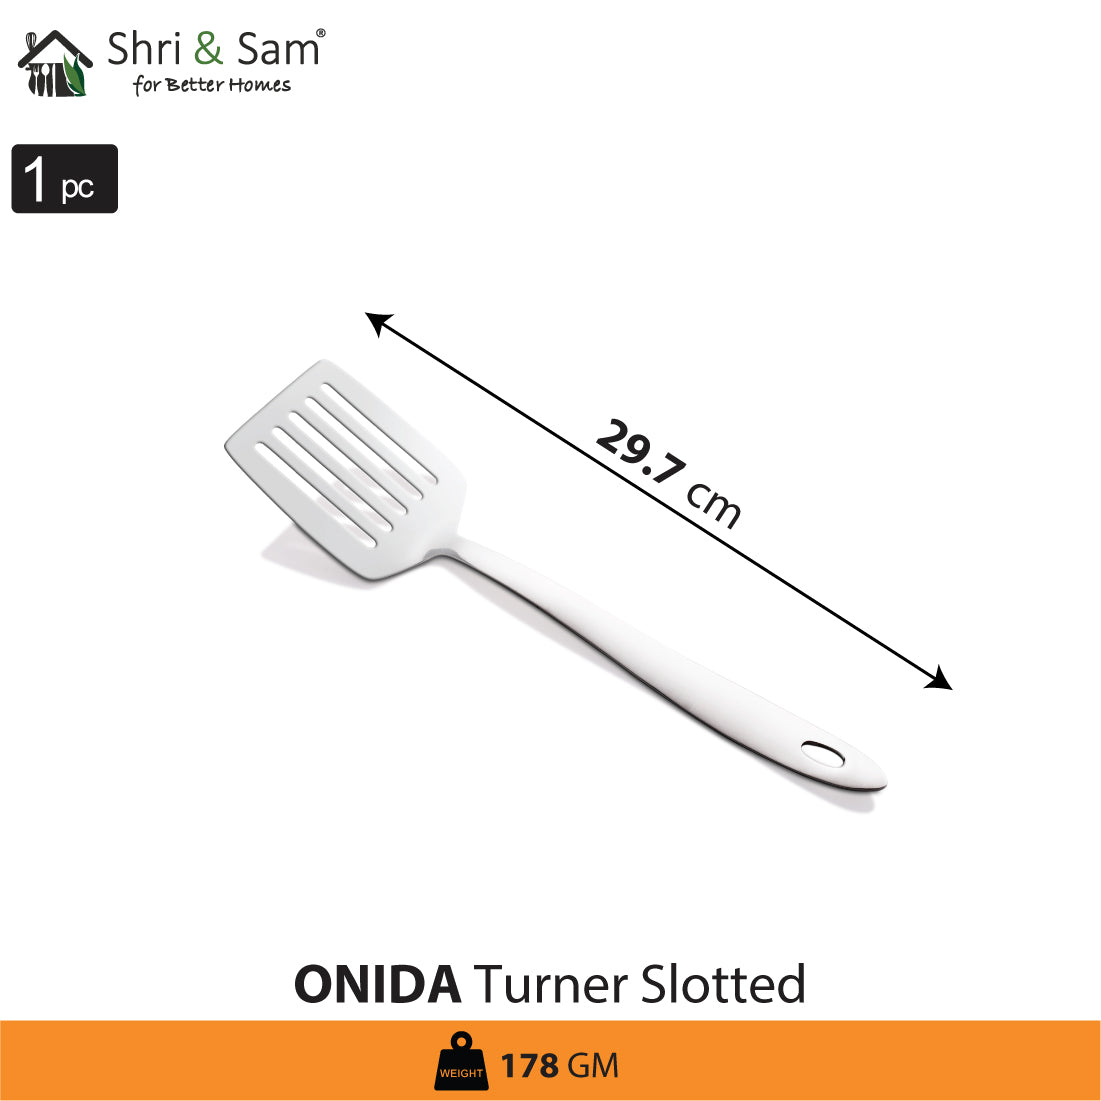 Stainless Steel Turner Slotted Onida